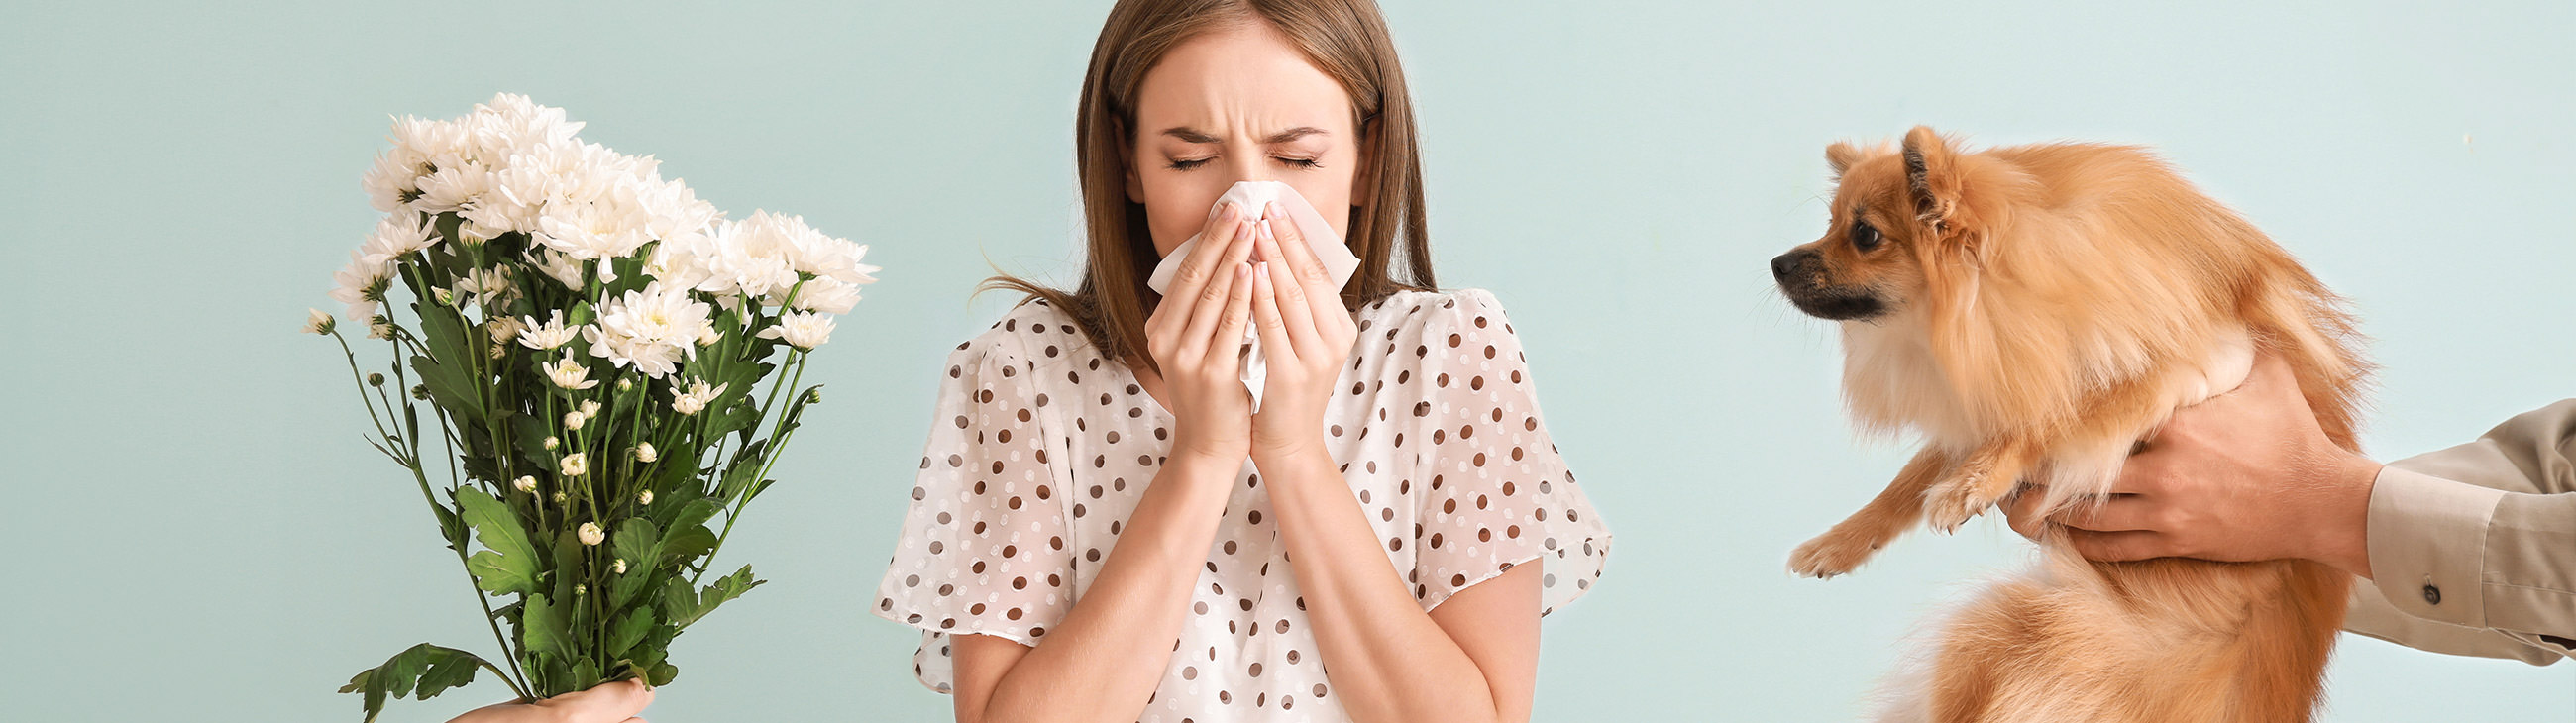 ¿El eczema es una alergia?